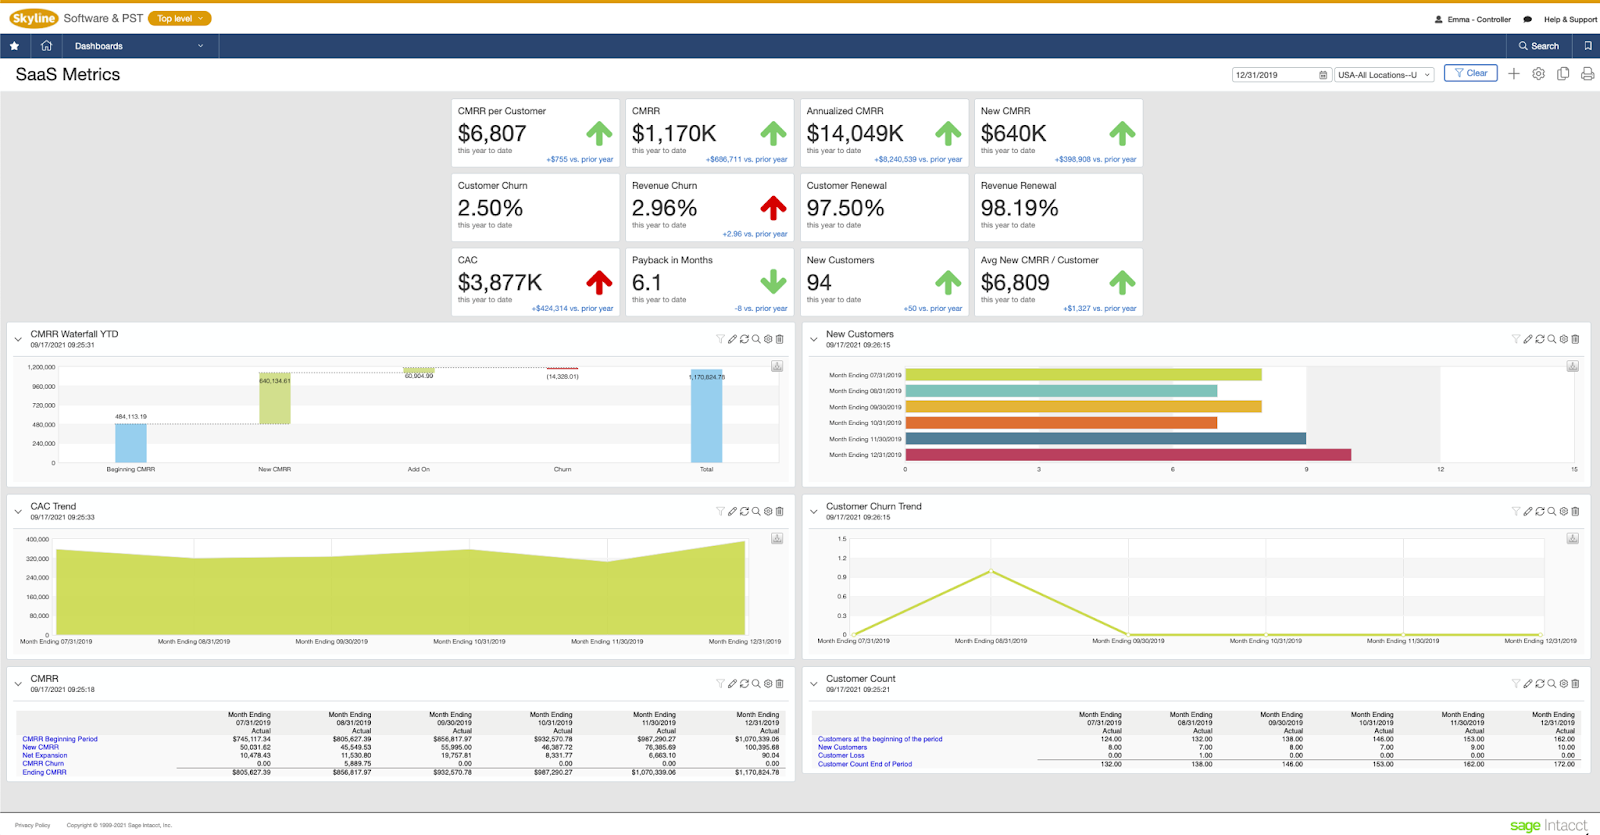 SaaS financial data organized into a dashboard screen. 